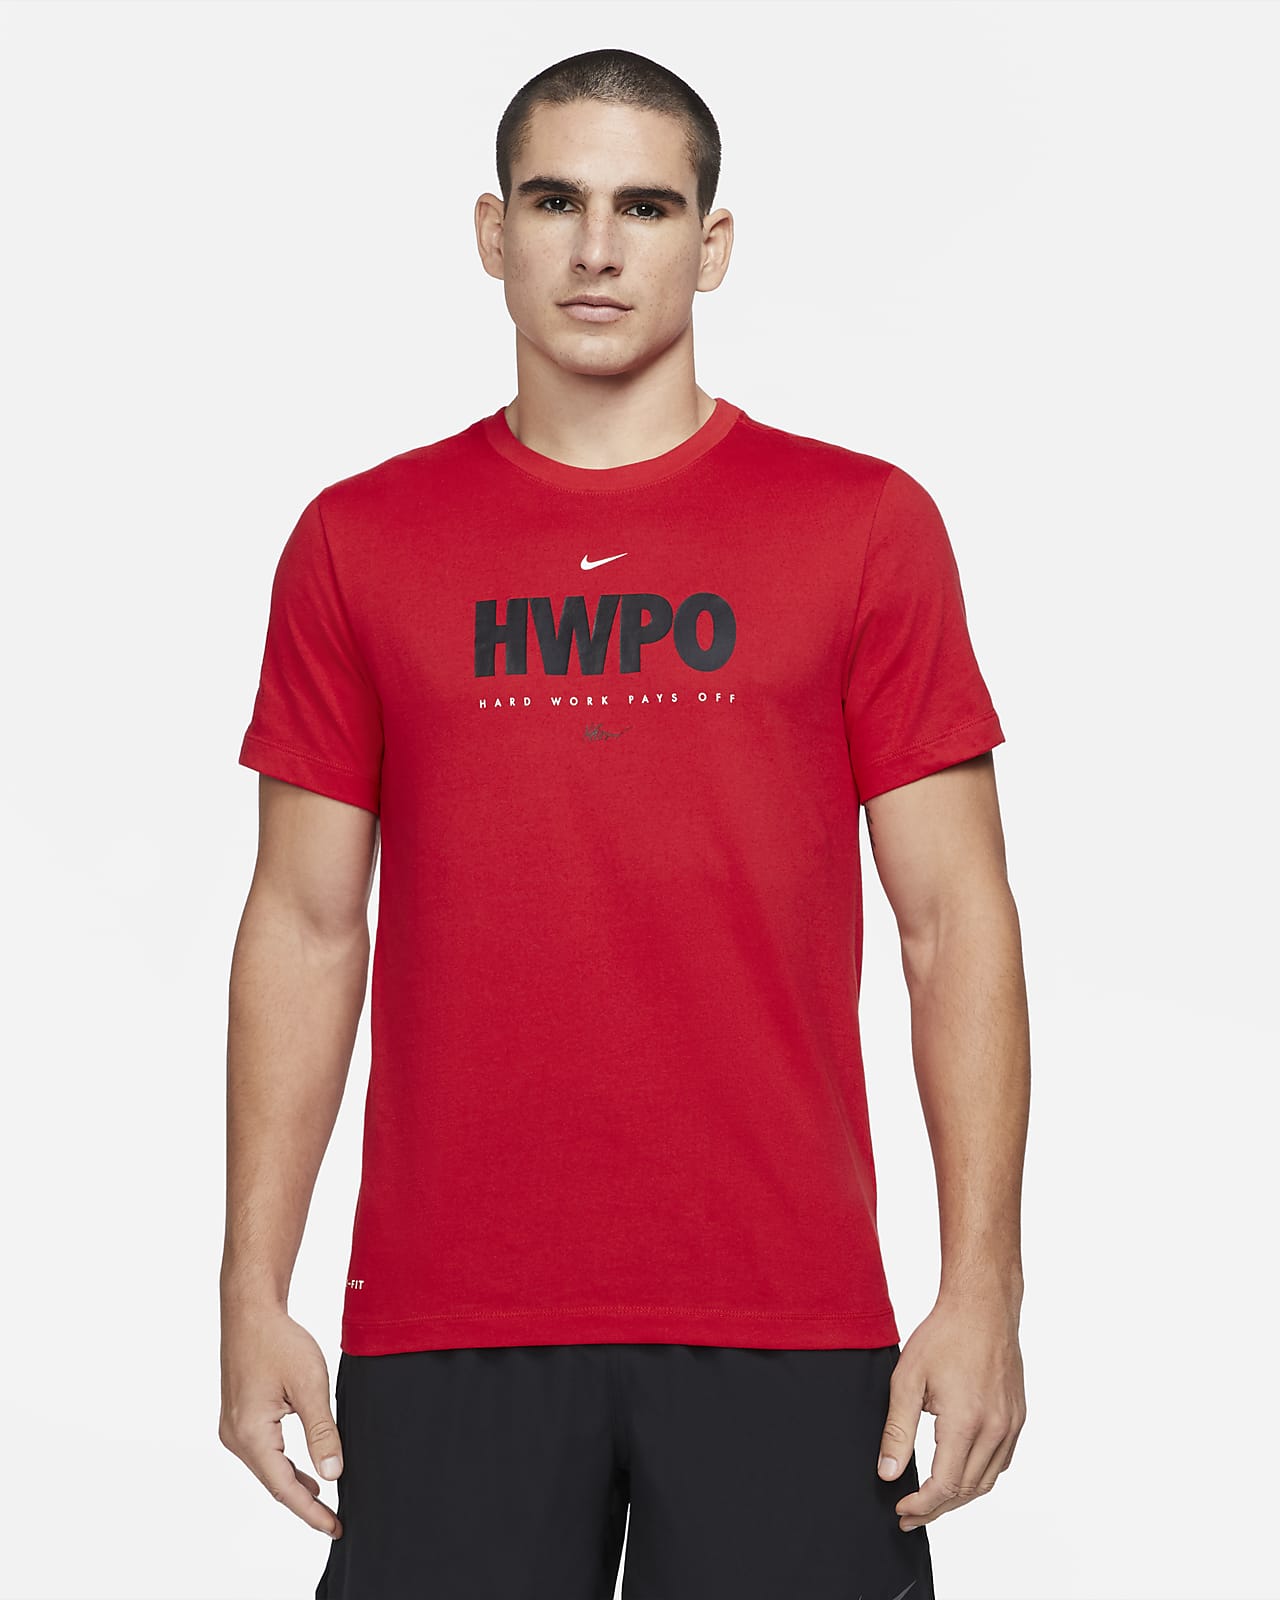 Dri-FIT "HWPO" Training Nike.com